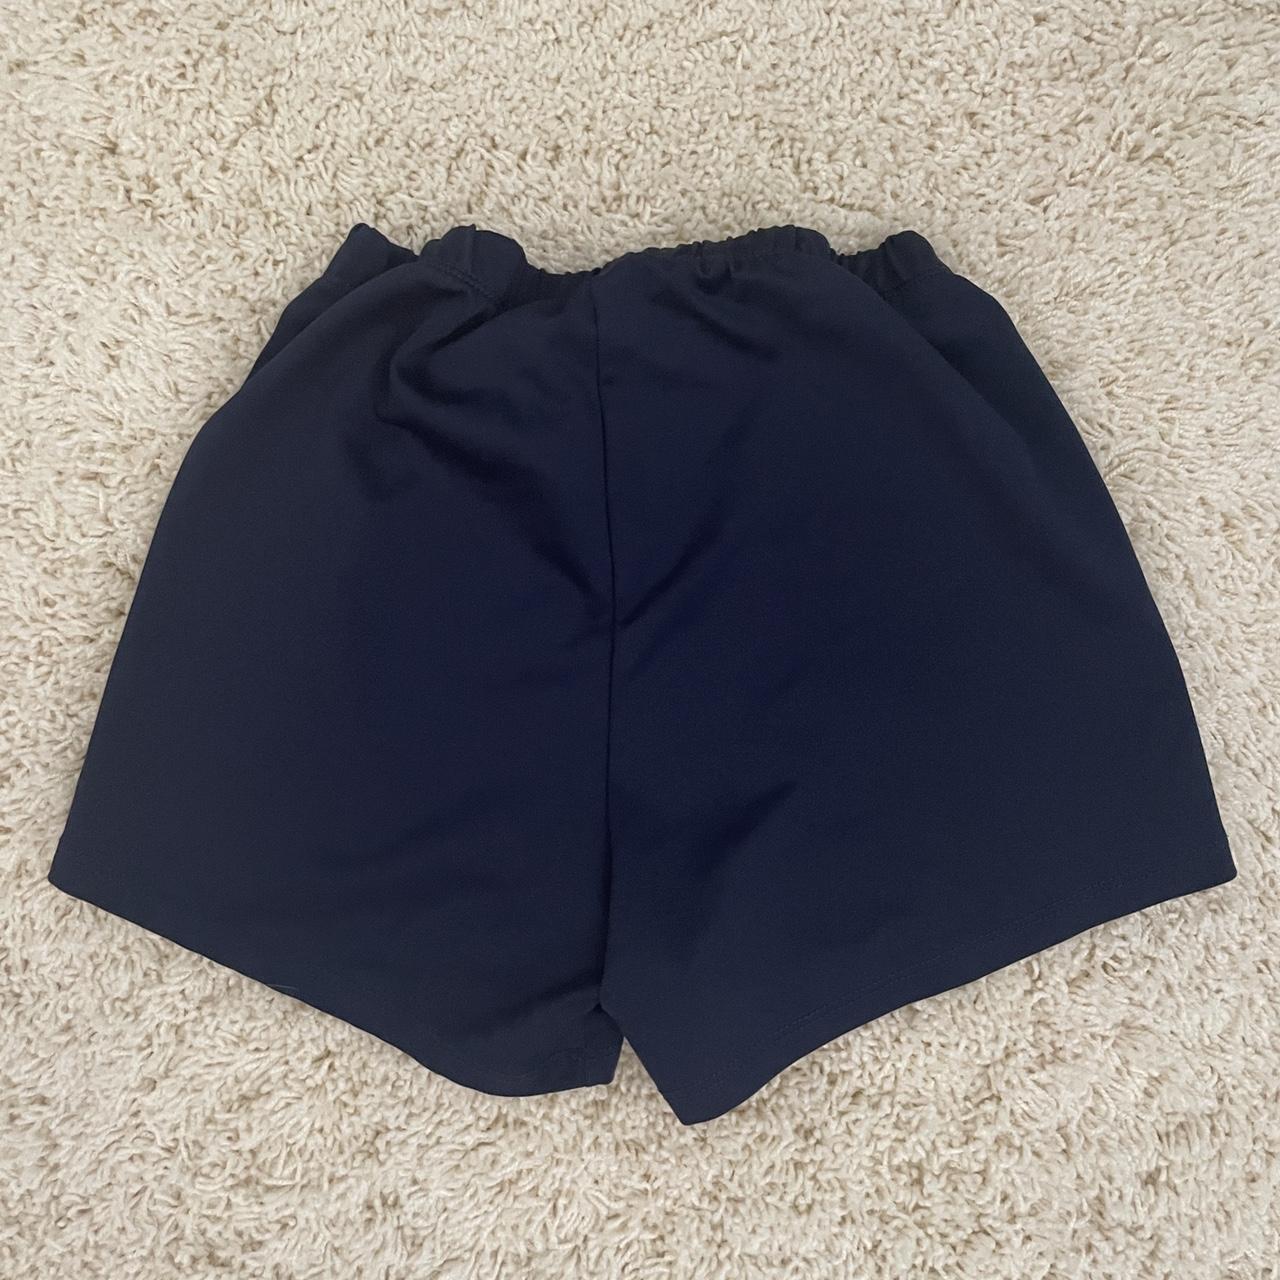 Mizuno Women's Navy Shorts (2)